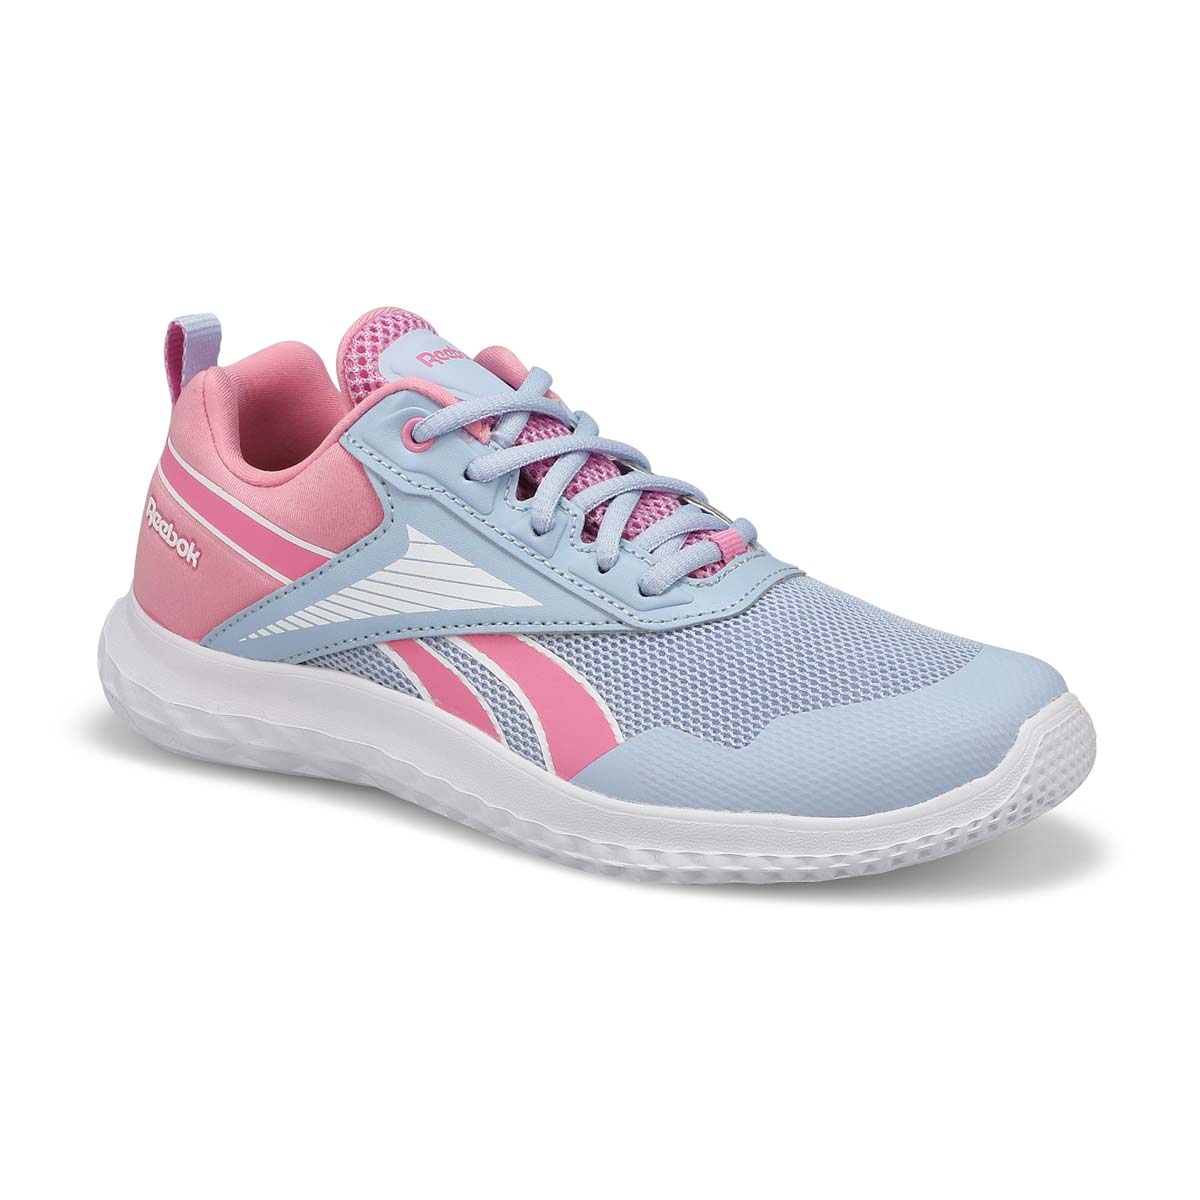 Girls Rush Runner 5 Lace Up Sneaker - White/Pink/Blue